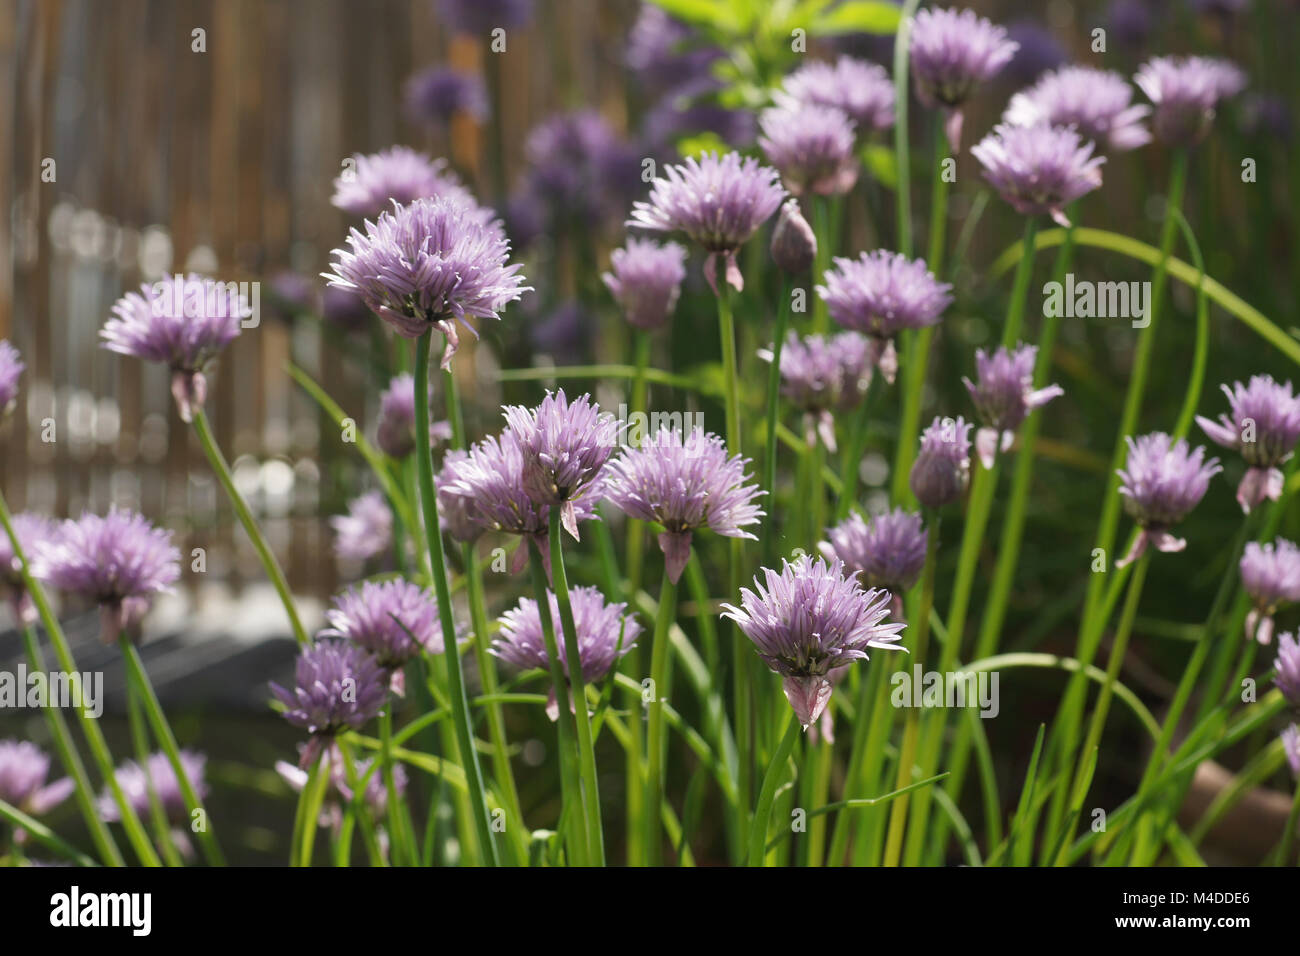 Allium schoenoprasum, Chives Stock Photo